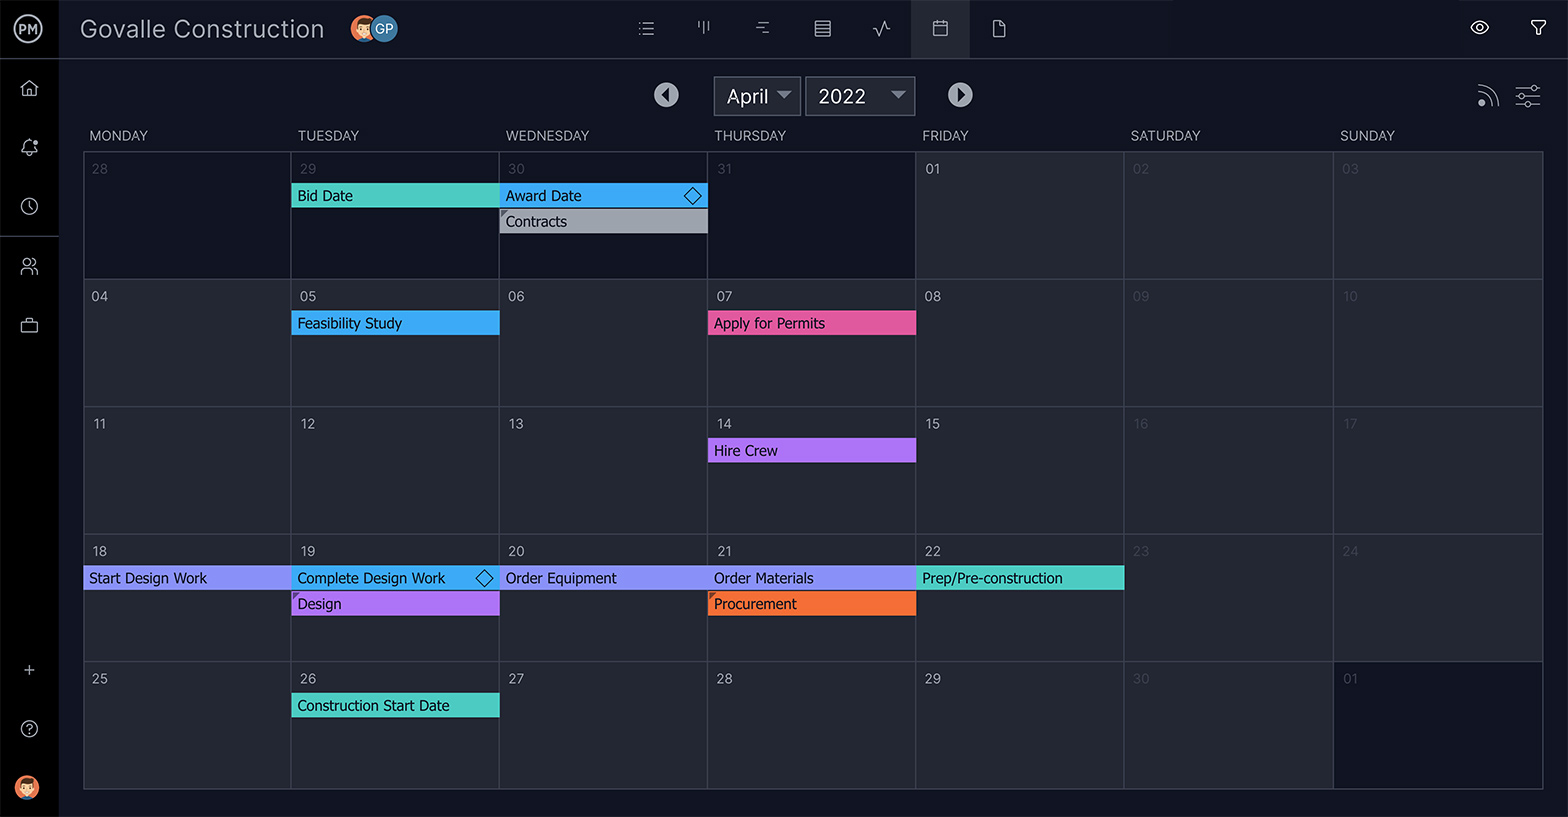 ProjectManager's task management calendar